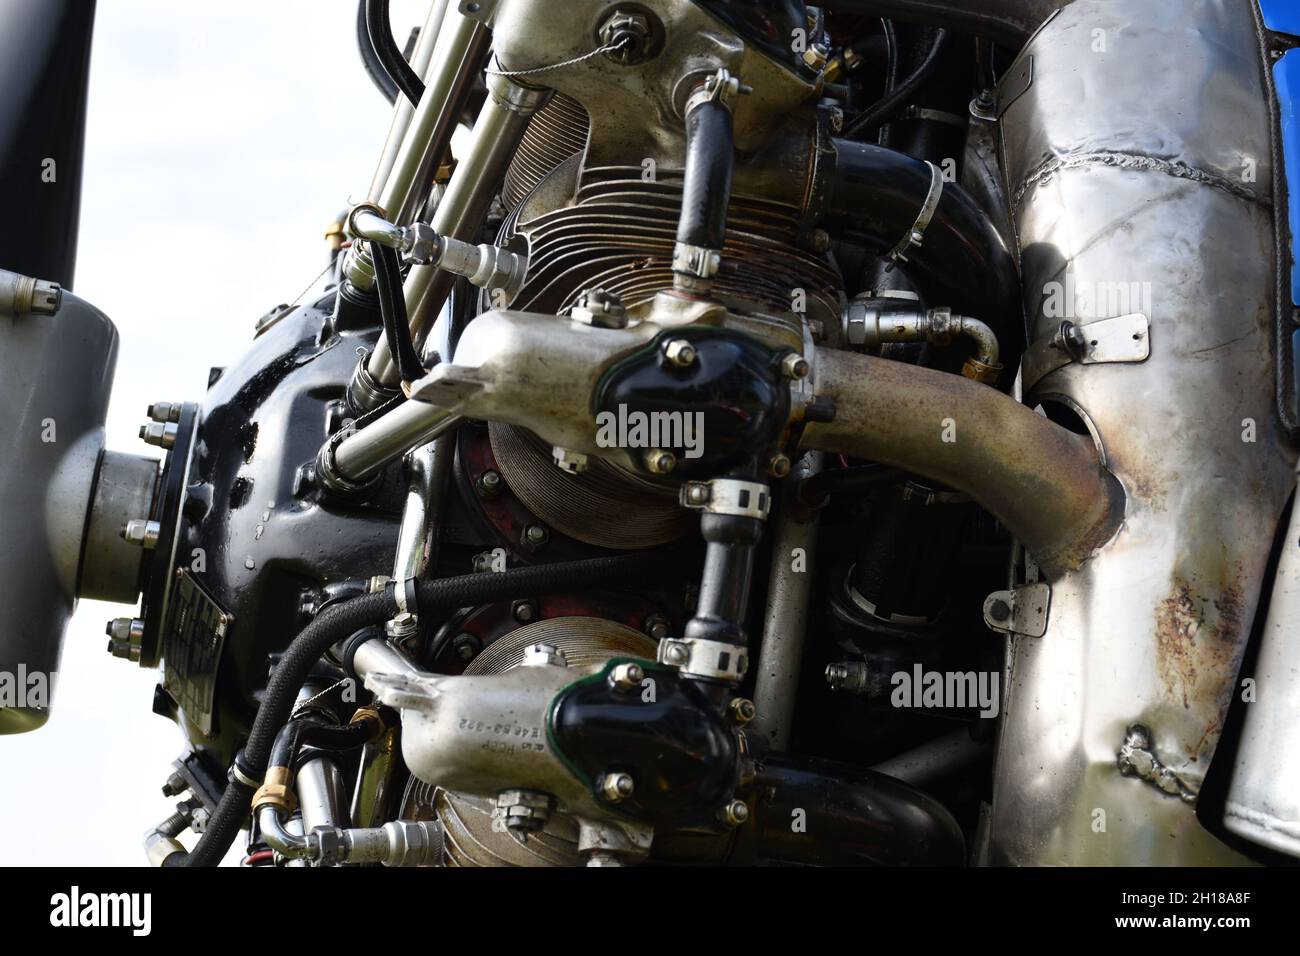 Pratt & Whitney radial engine close up Stock Photo